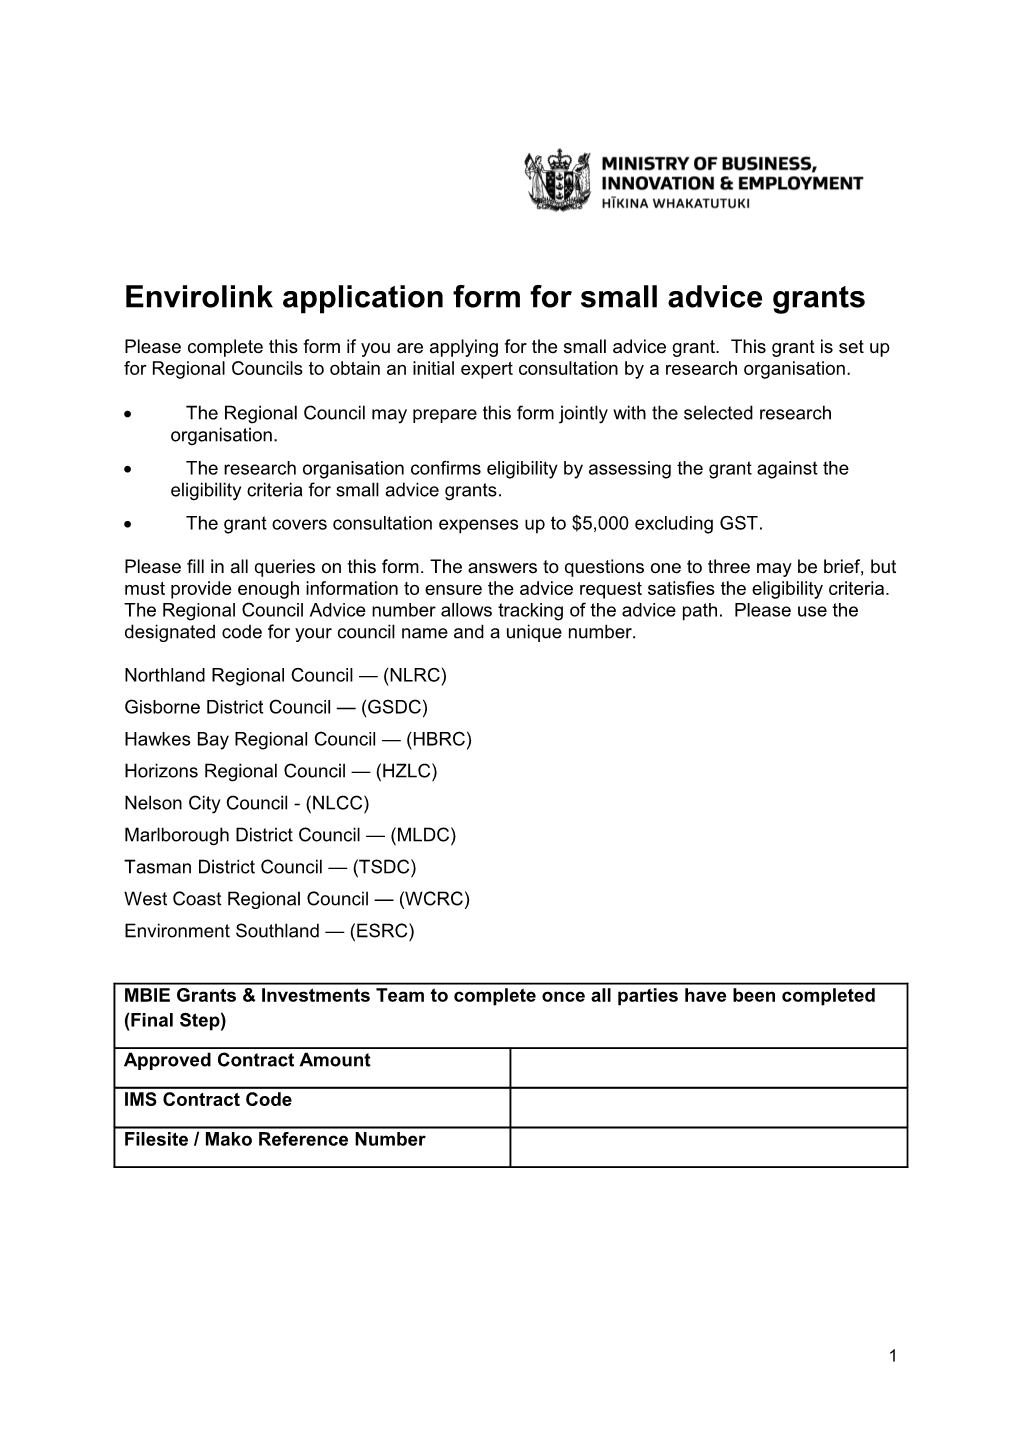 Envirolink Applicationform for Small Advice Grants